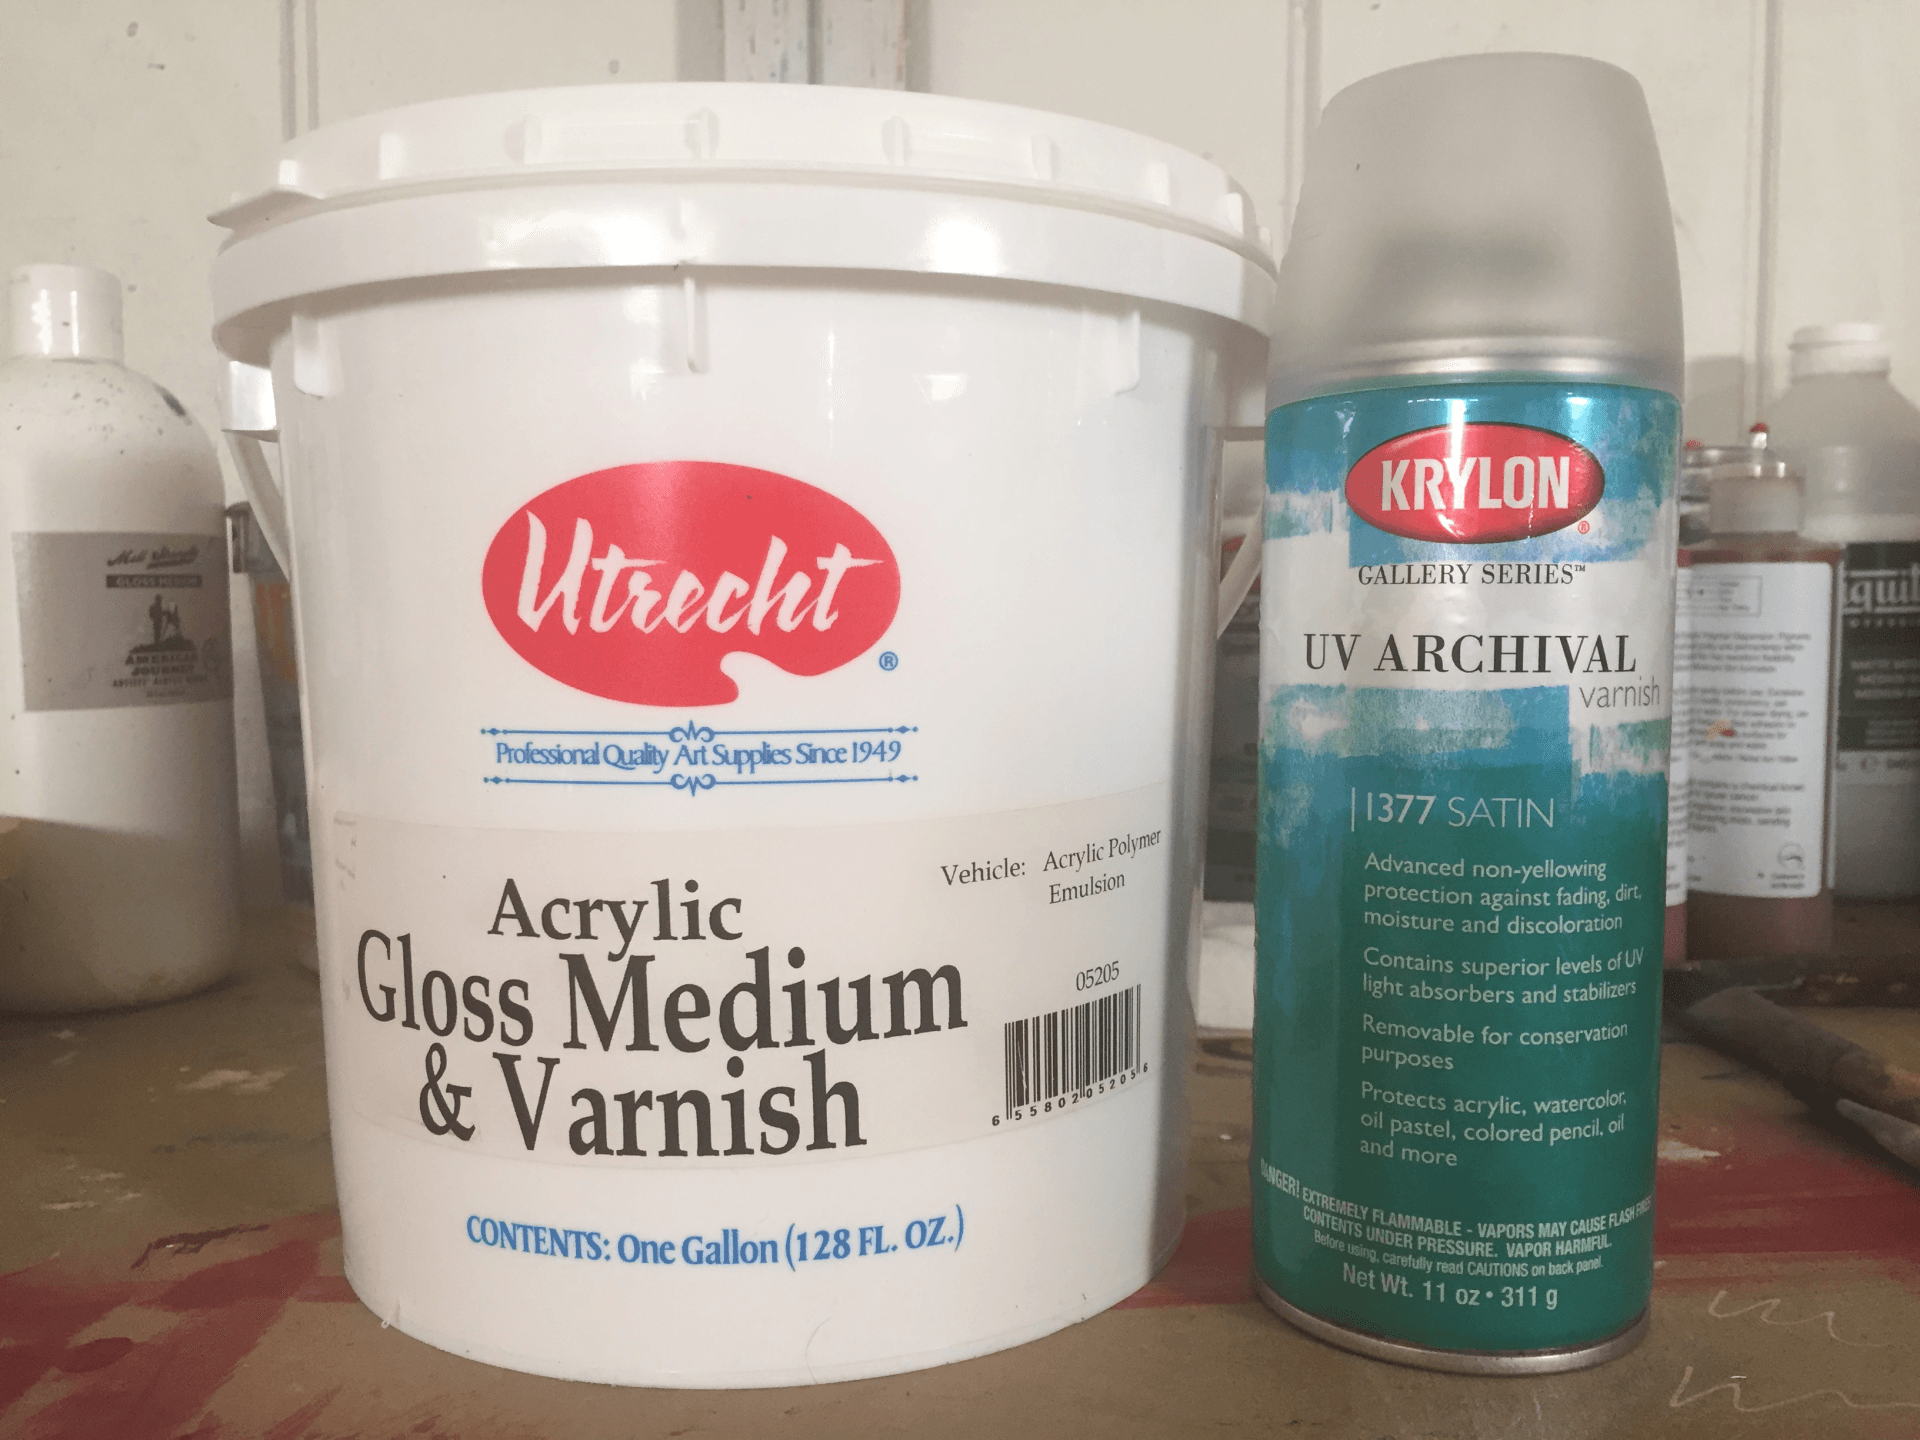 acrylic gloss medium varnish and krylon uv archival varnish